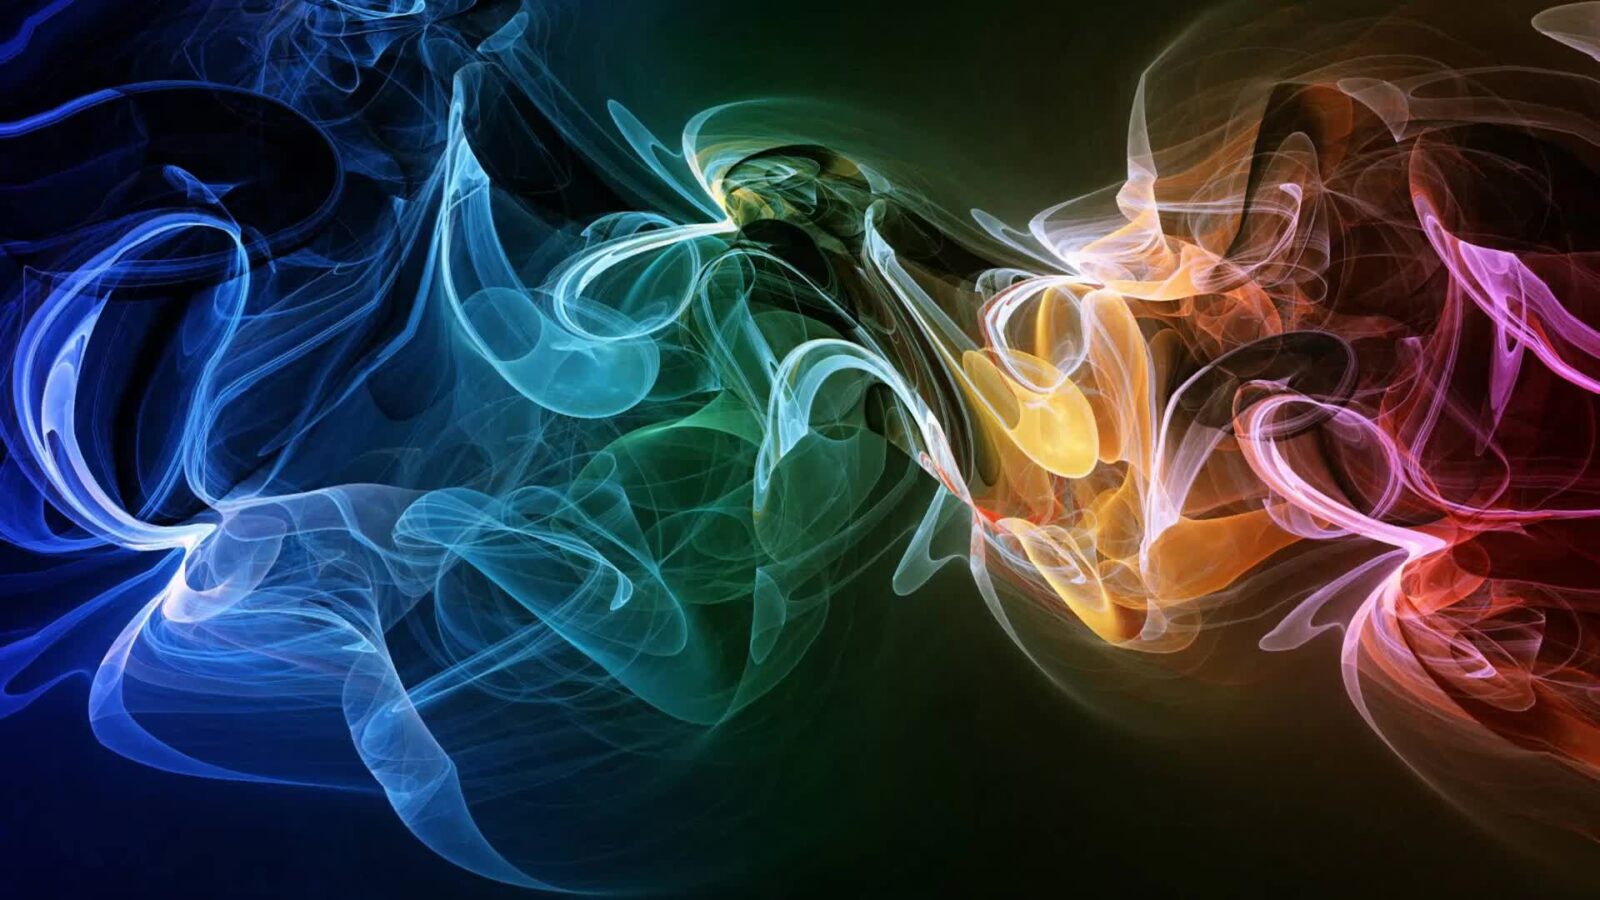 Colorful Abstract Smoke - Animated Windows Wallpaper - Live Desktop